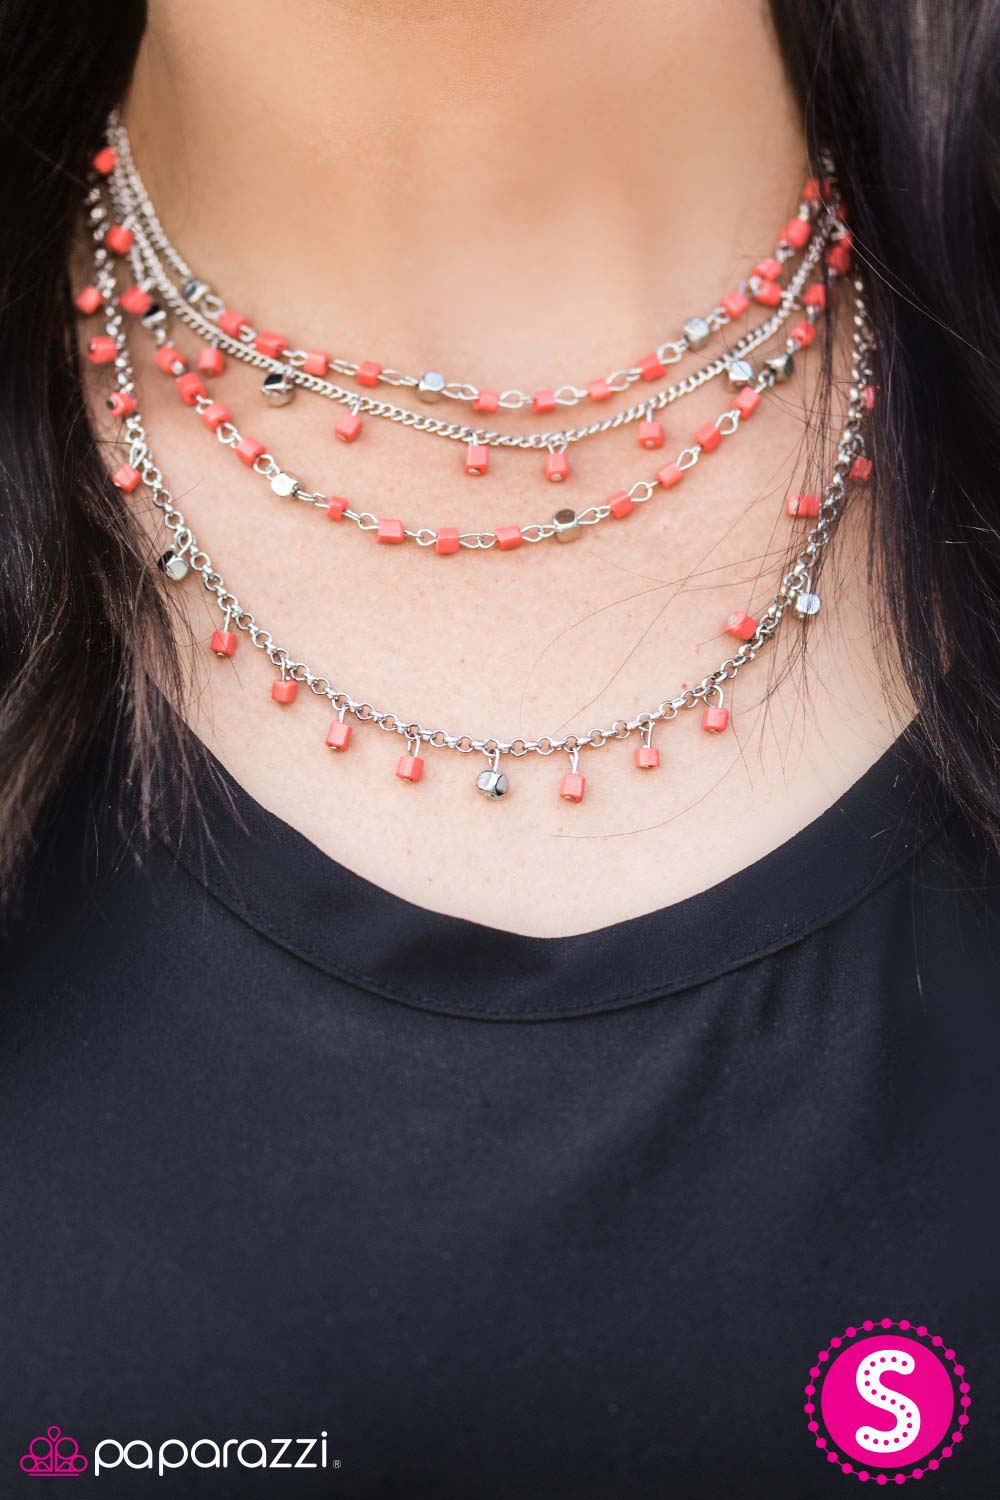 BLOCK Star - Paparazzi necklace